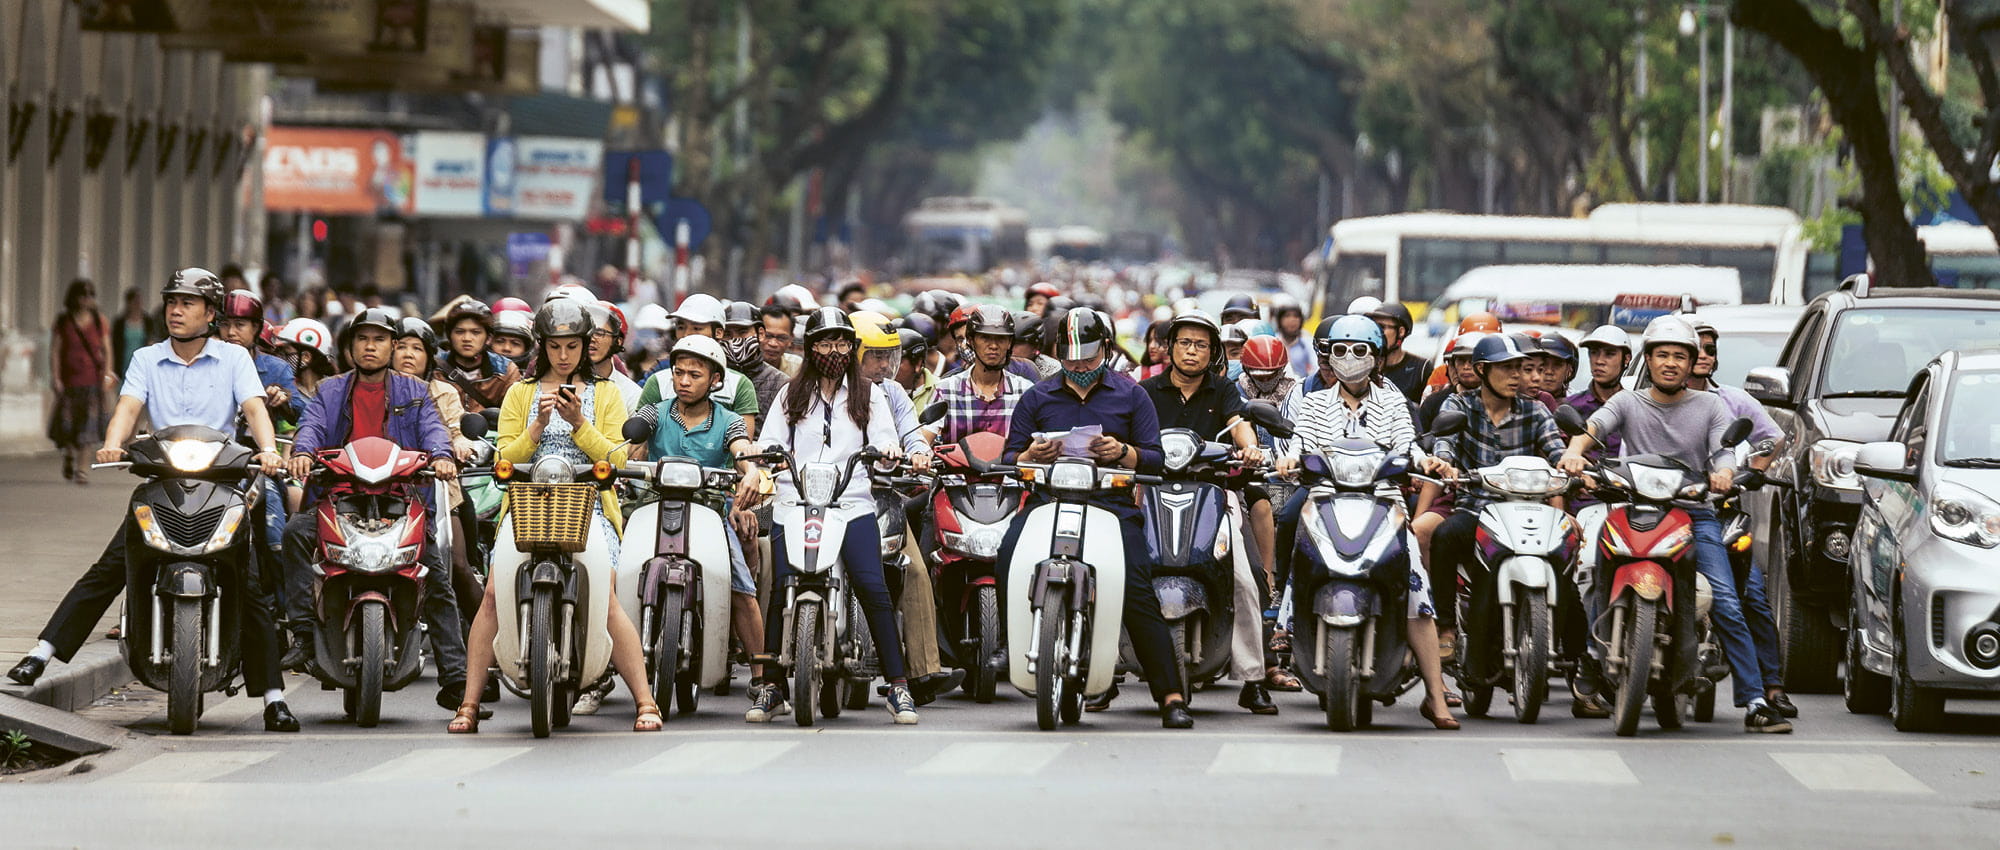 Many people on motorcycles waiting in front of a crosswalk. Copyright: iStock/Artit_Wongpradu